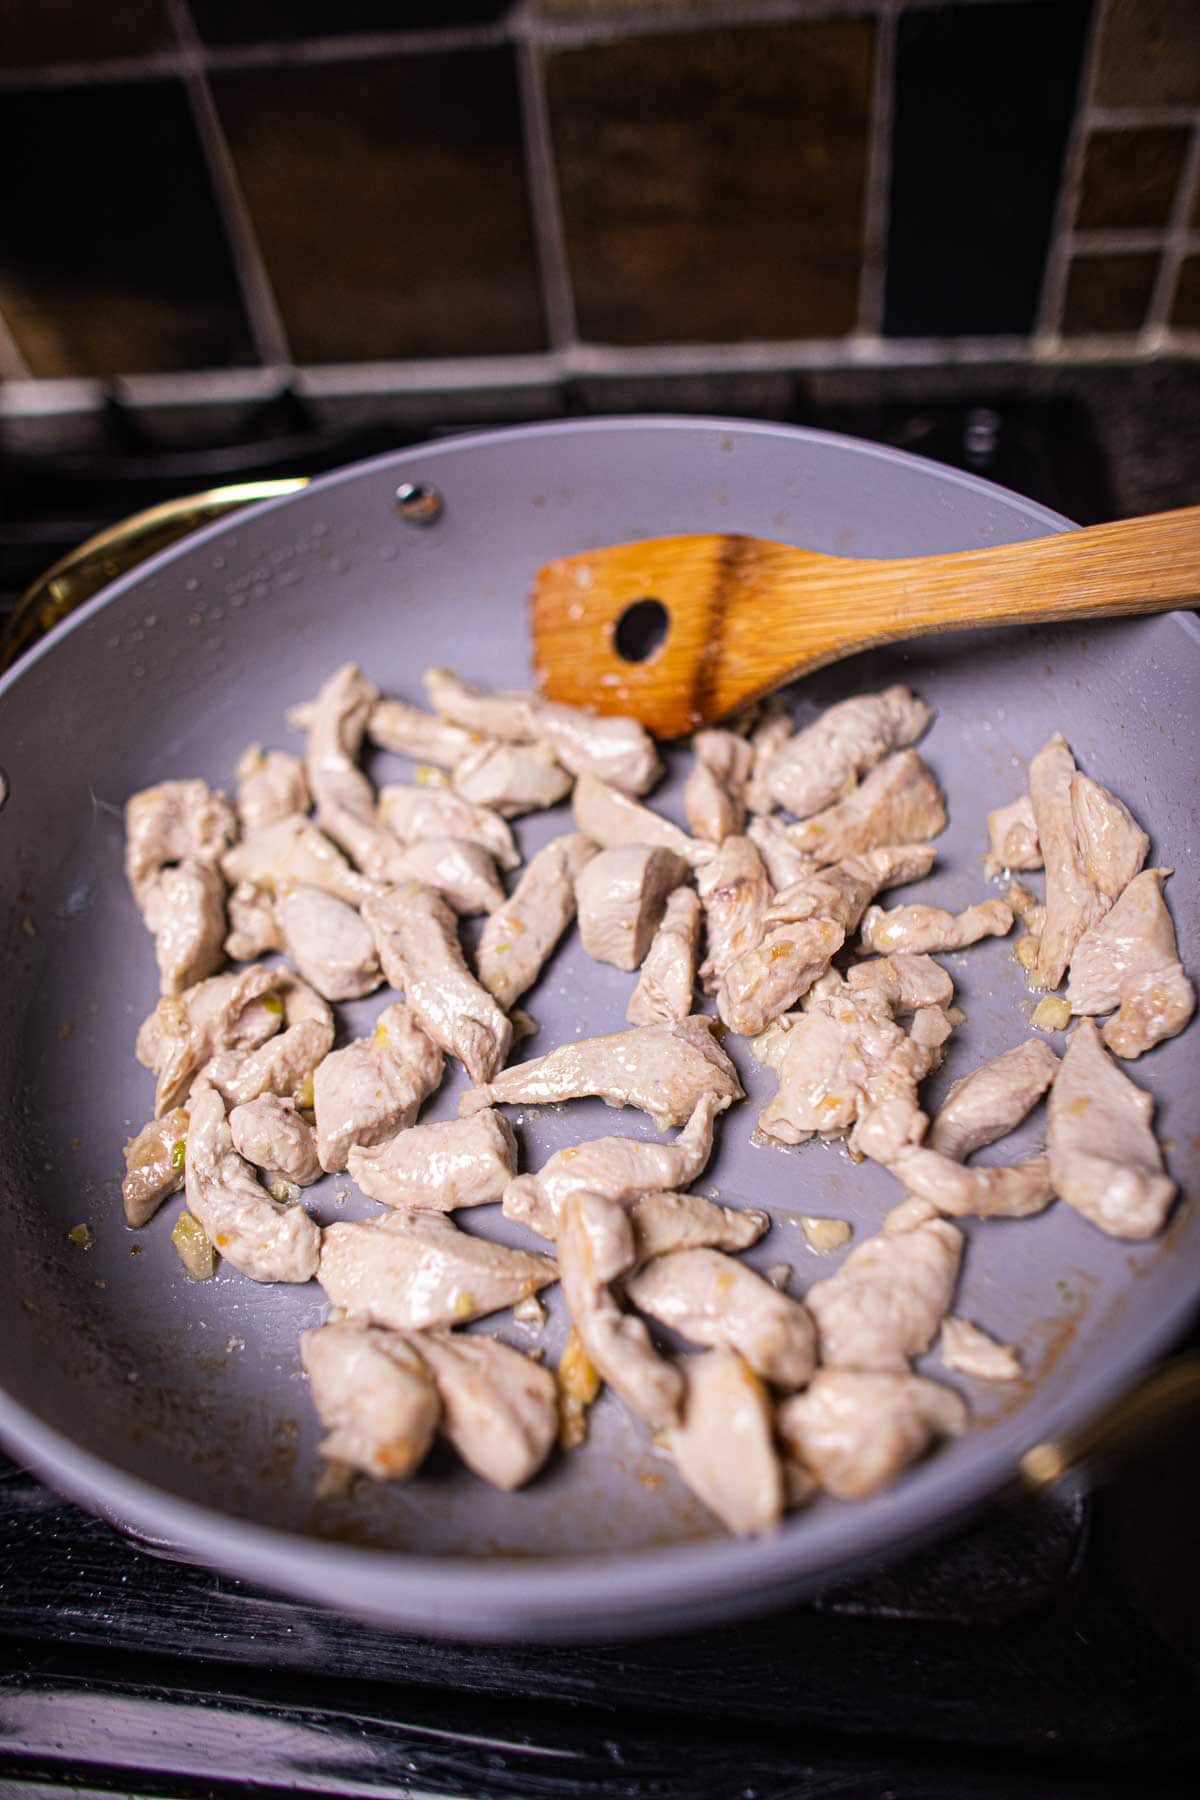 Chicken stir frying in a pan.